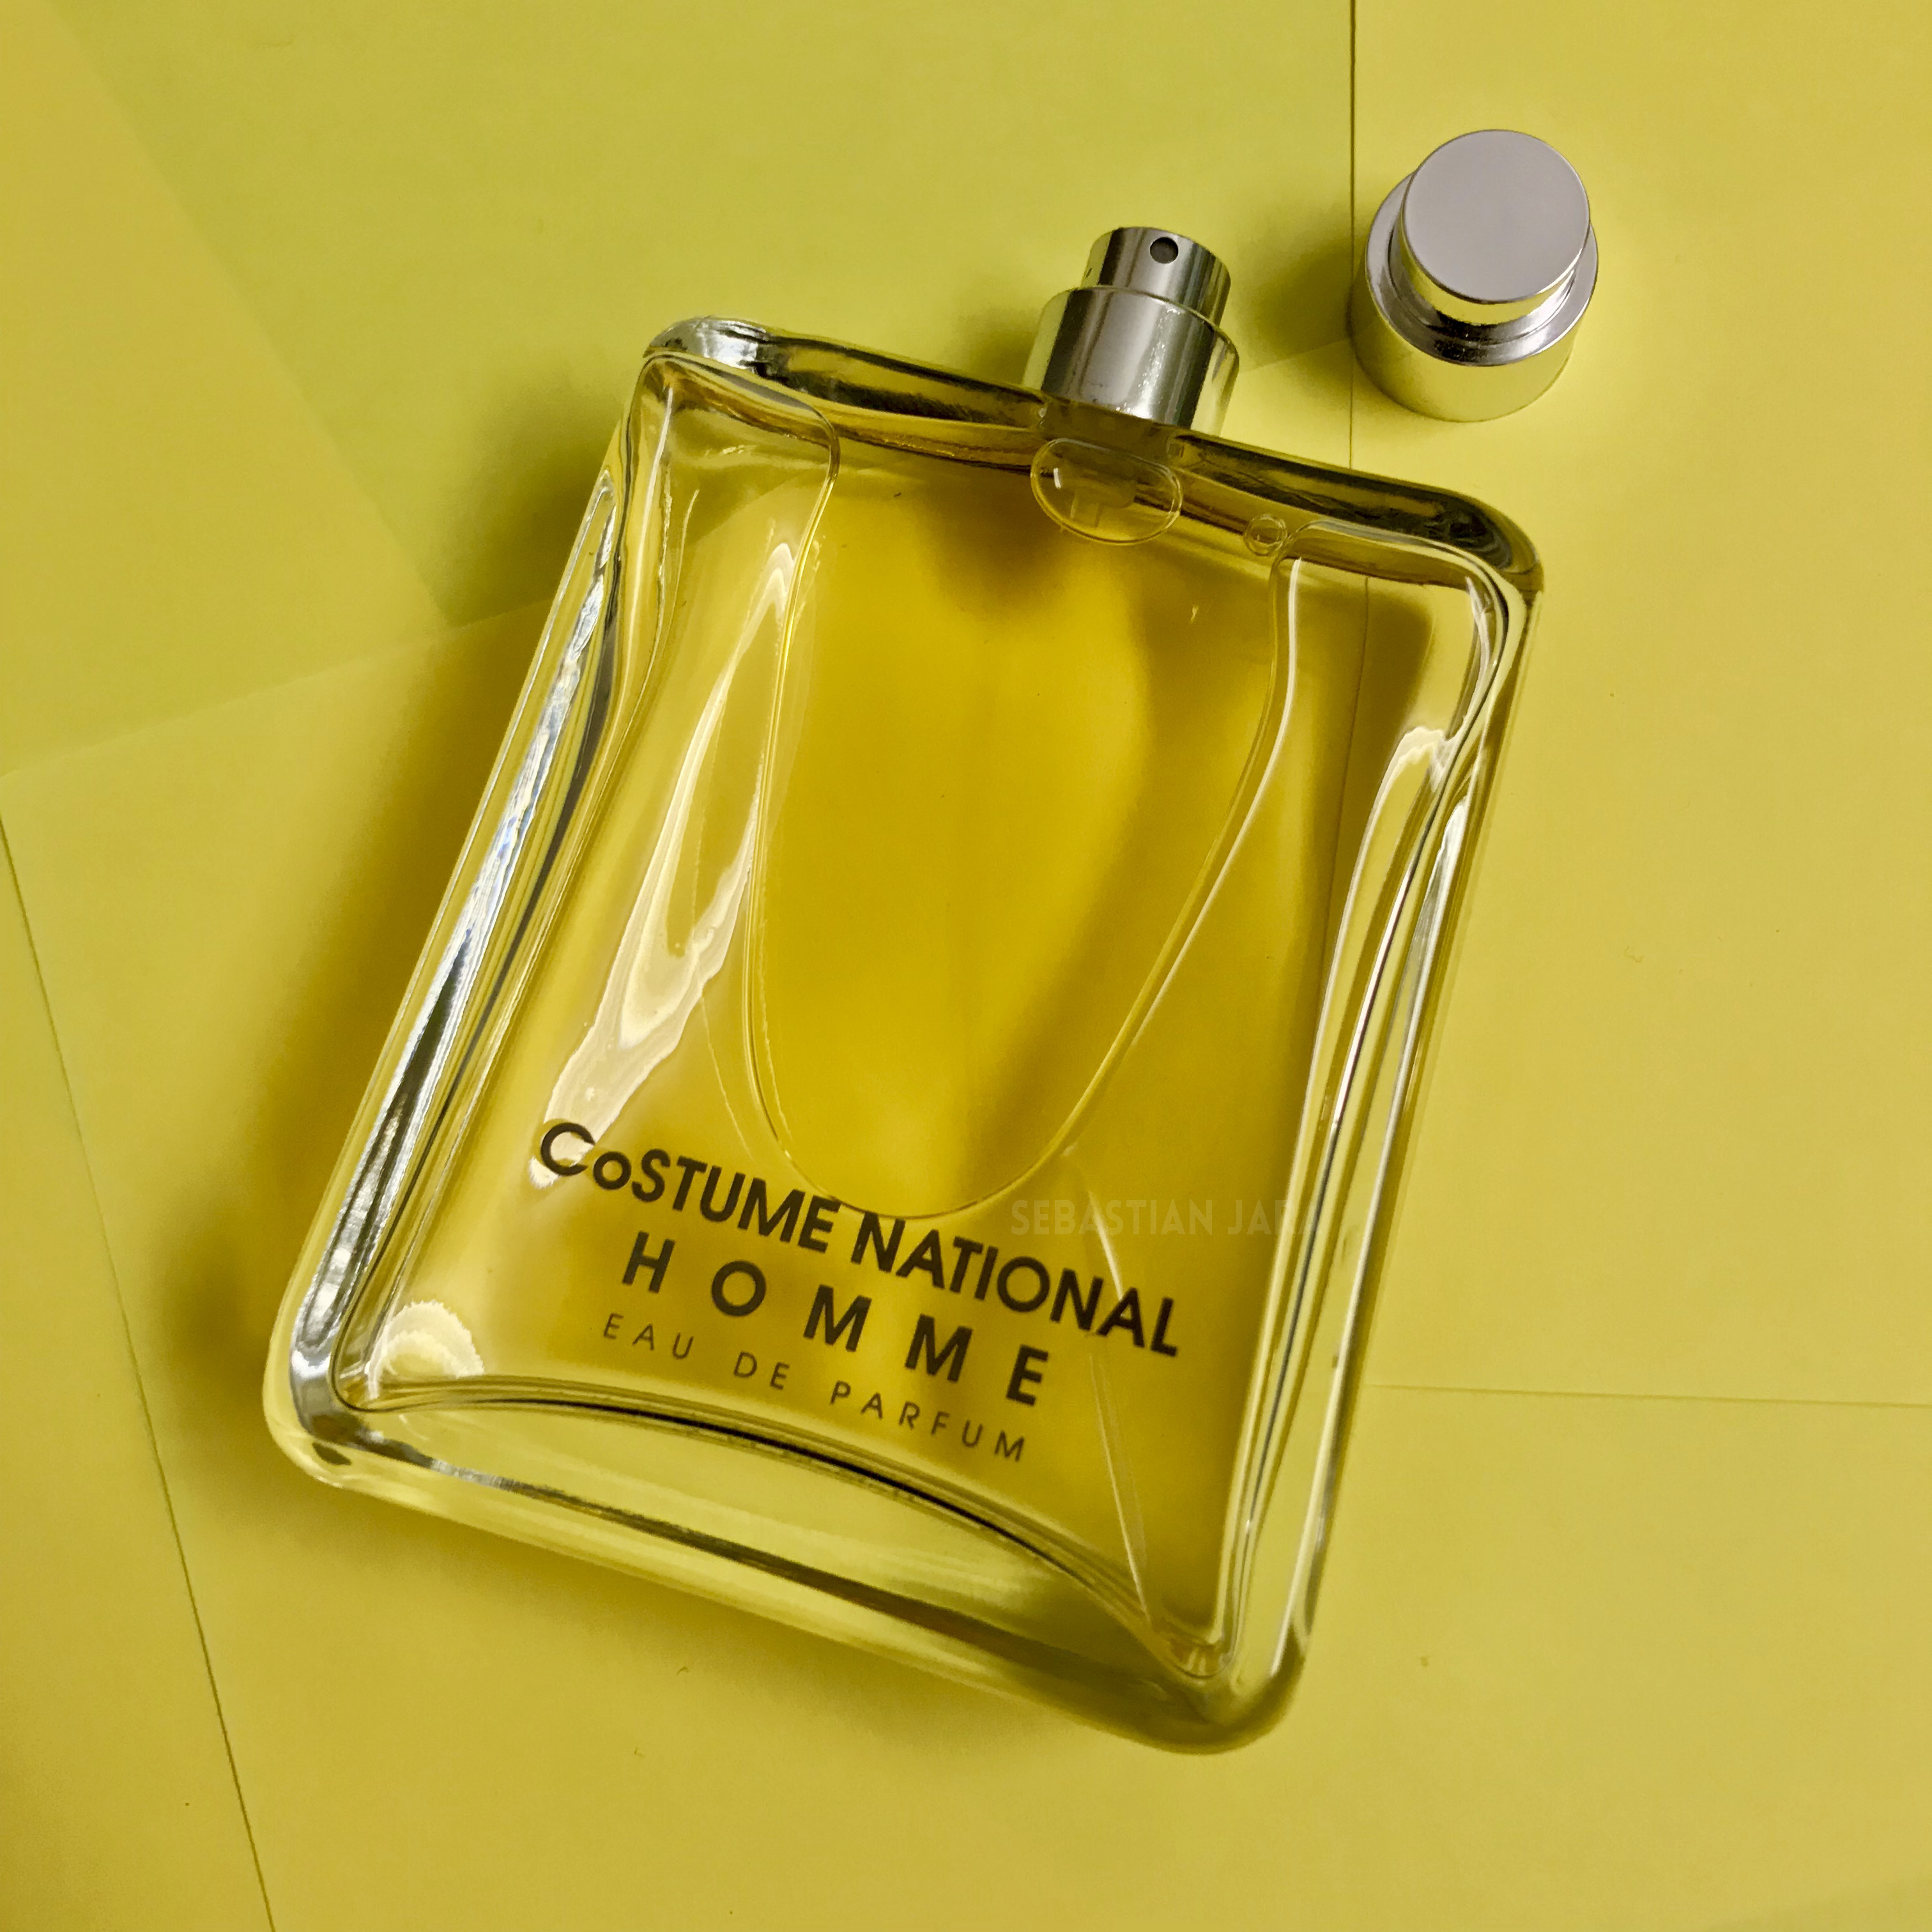 Claire horizon episode CoSTUME NATIONAL Homme Review (2009) + Top Five Fragrance Designer Draw -  ÇaFleureBon Perfume Blog